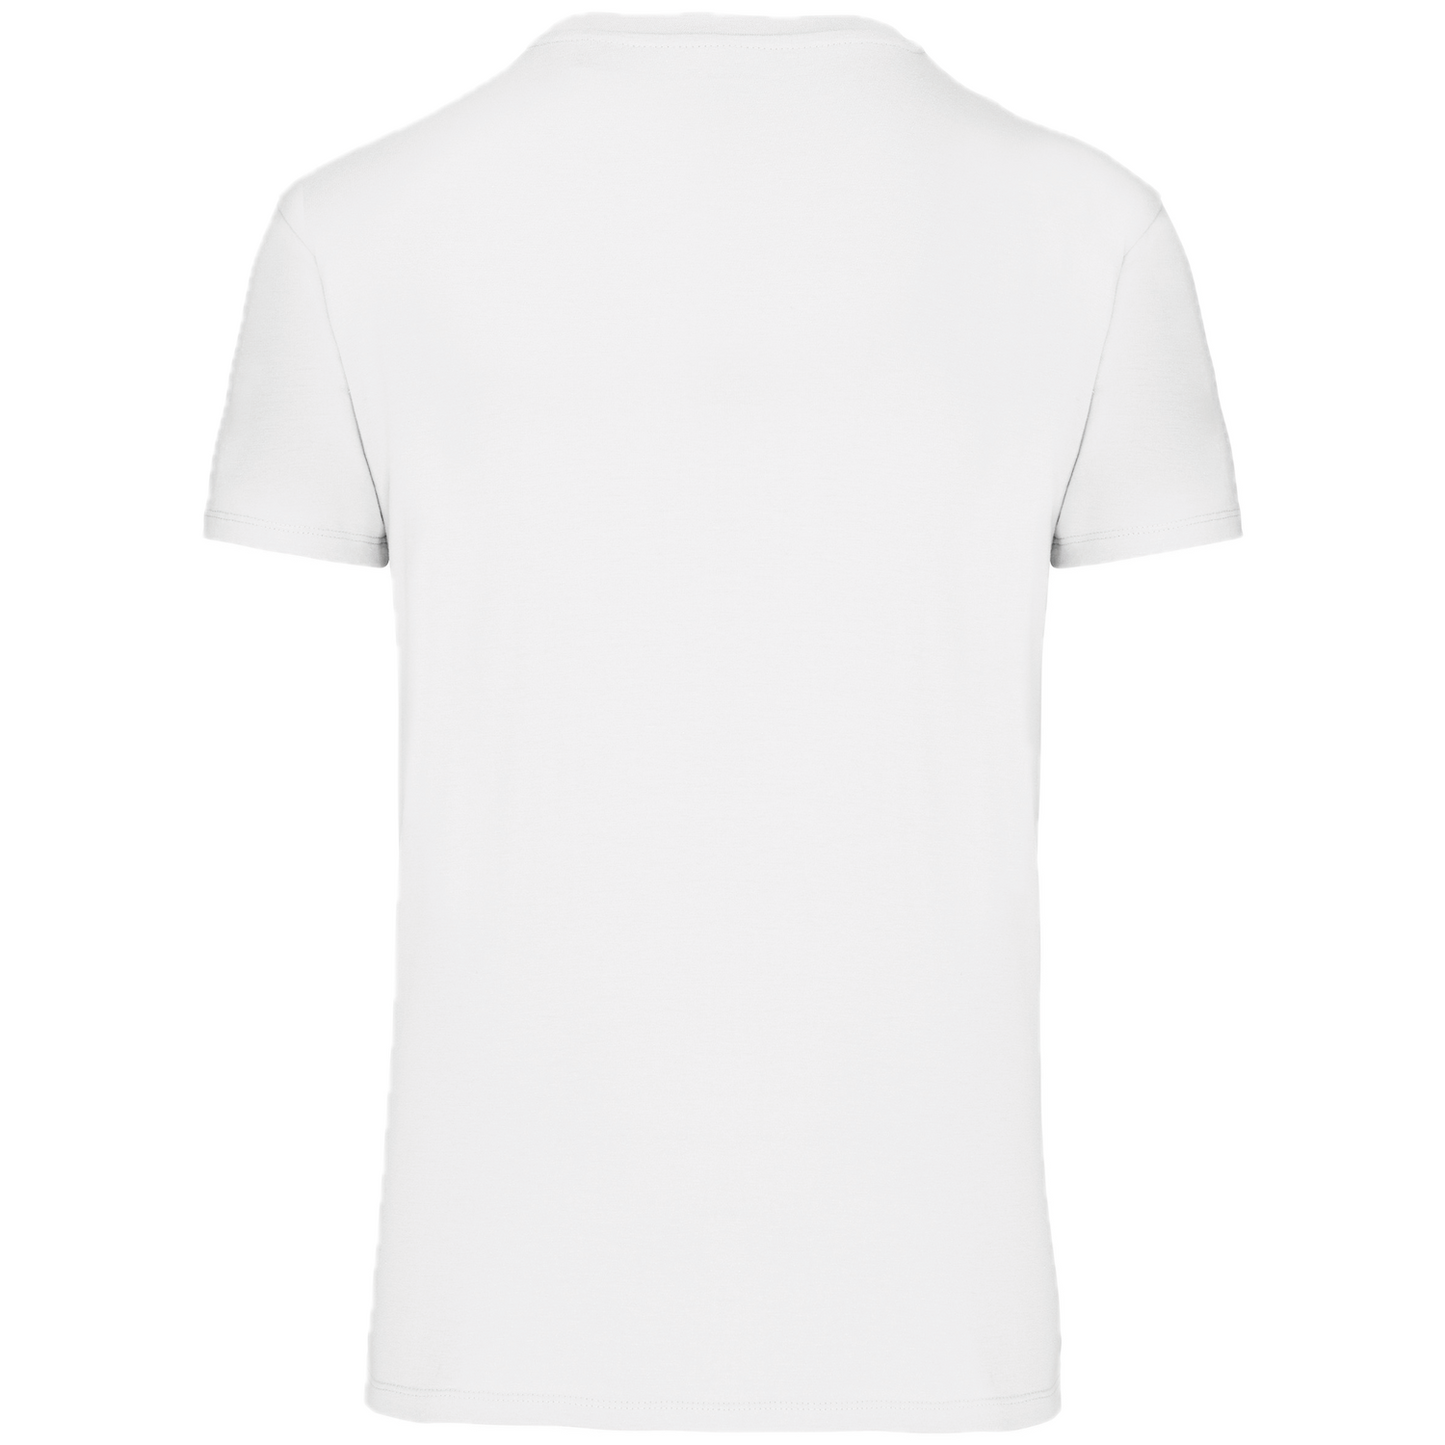 T-shirt blanc adult impression quadri devant et Dos